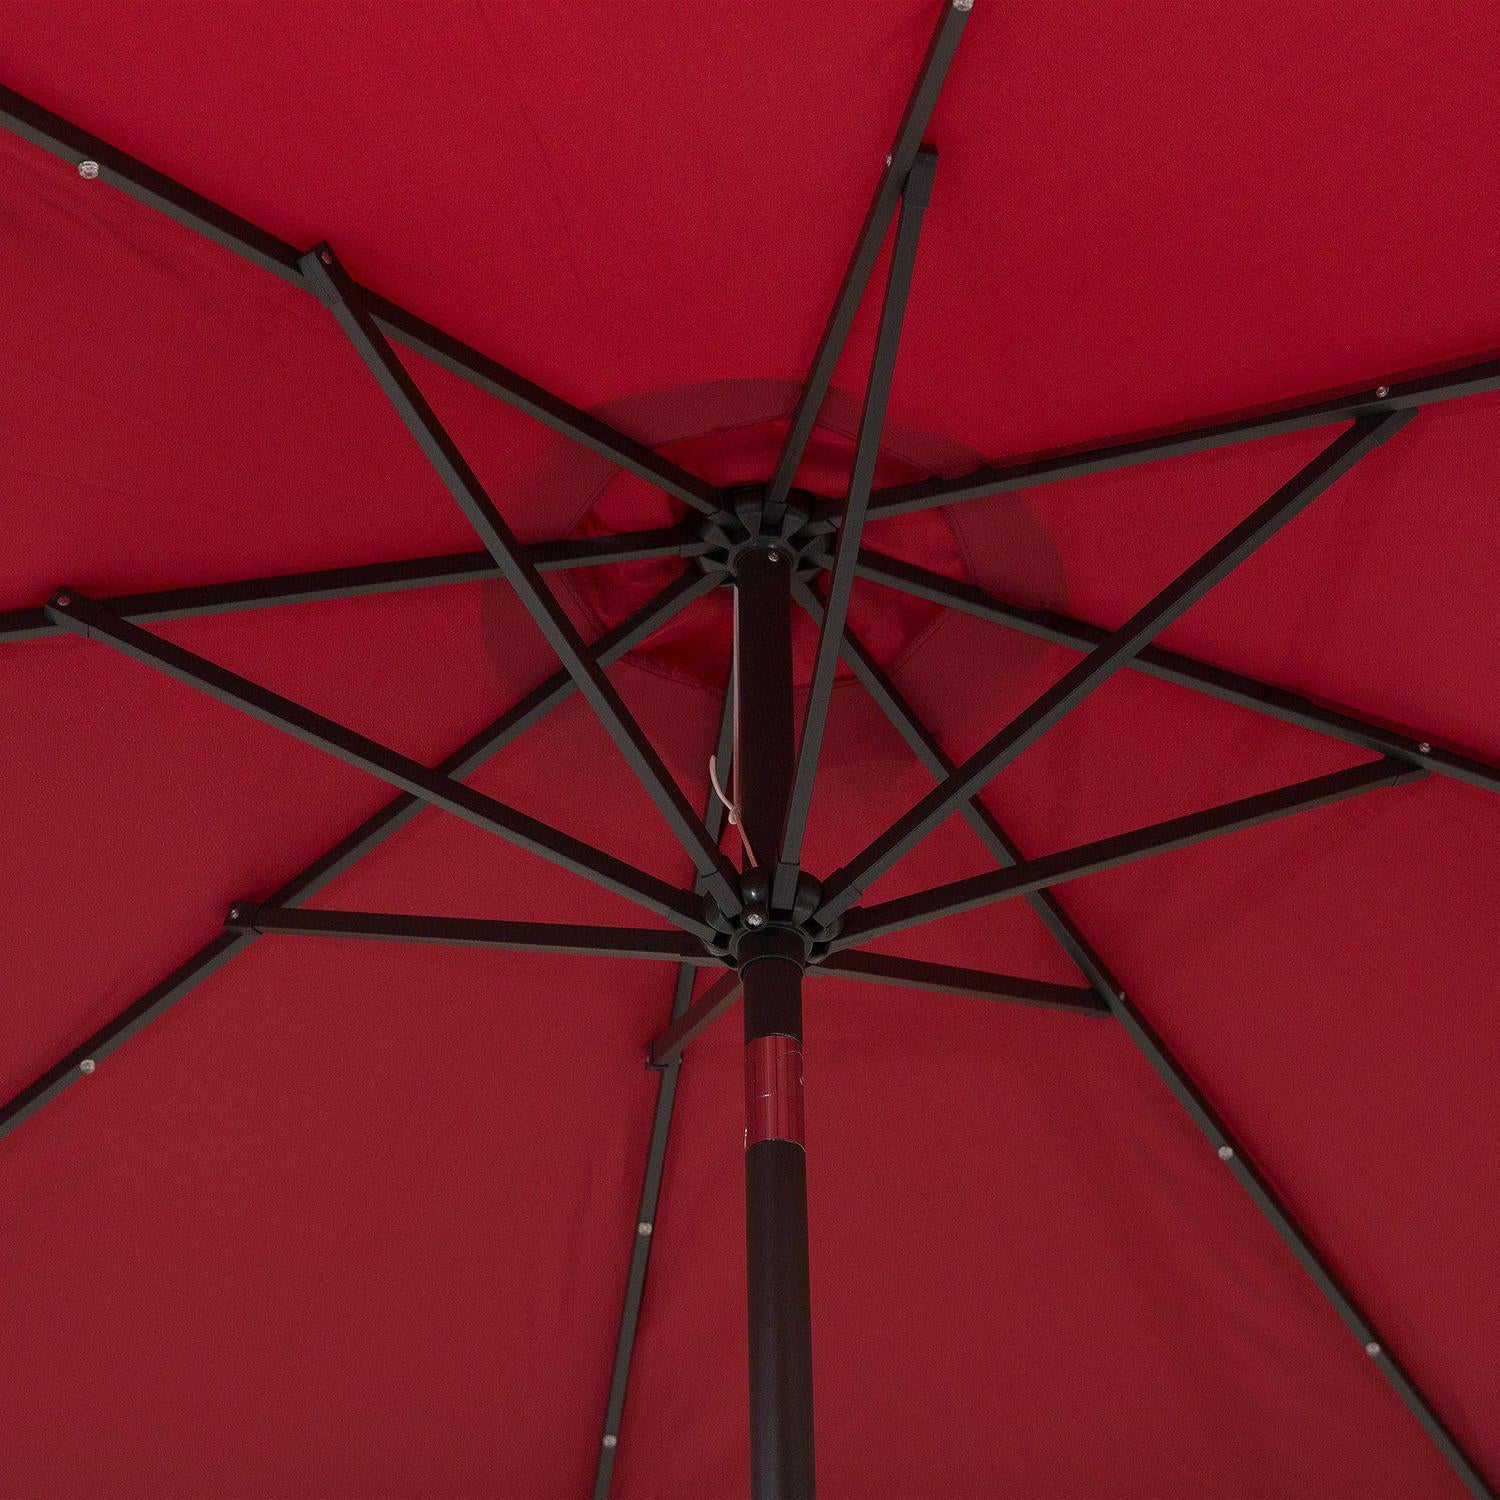 24 LED Solar Powered Parasol Umbrella-Wine Red